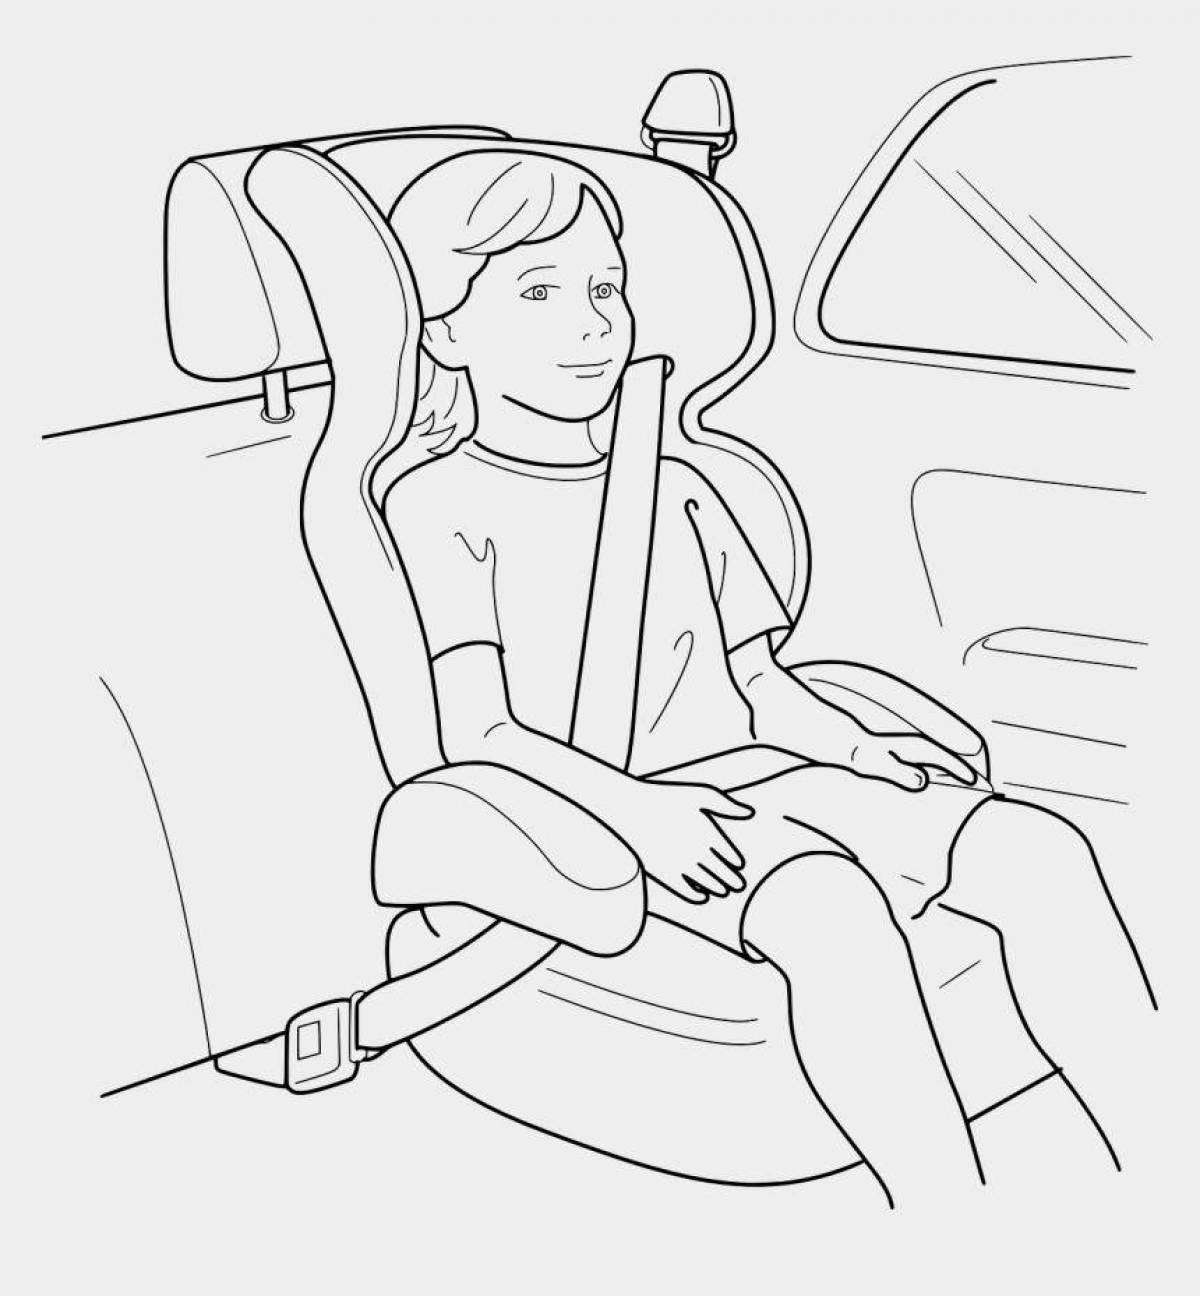 Car seat entertaining child